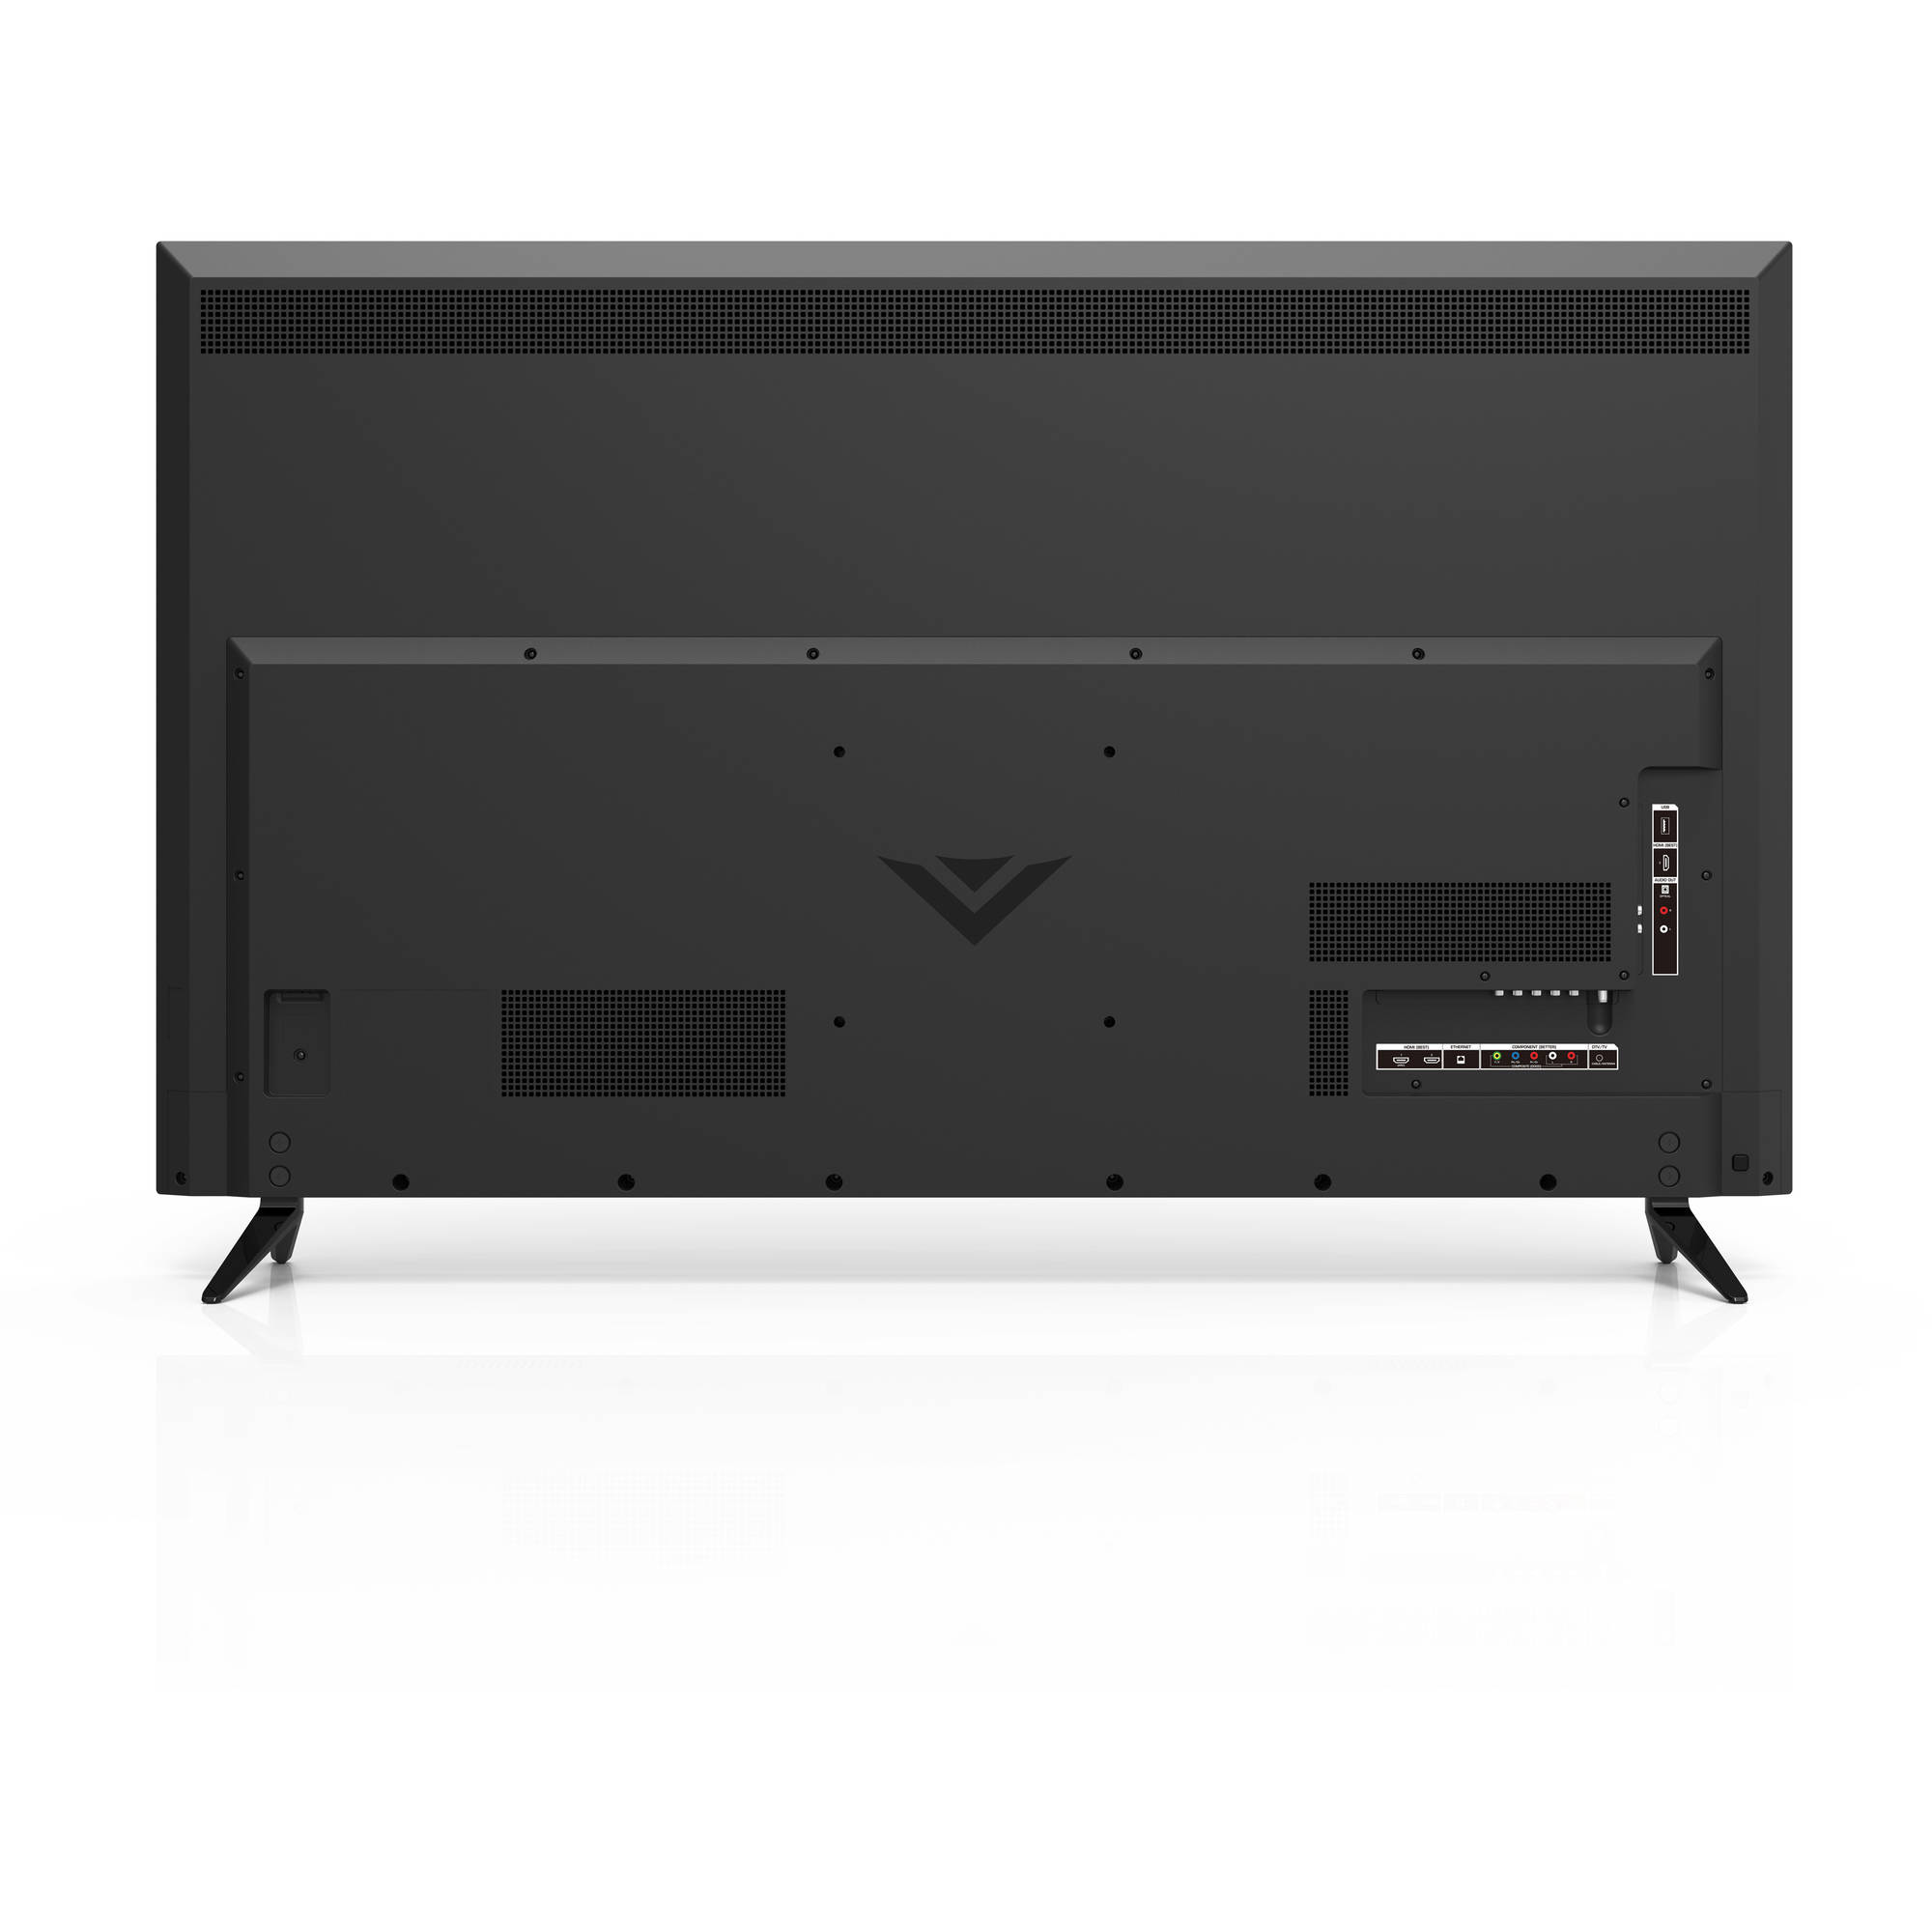 Vizio 55" Class FHD (1080P) Smart LED TV (D55f-E2) - image 4 of 9